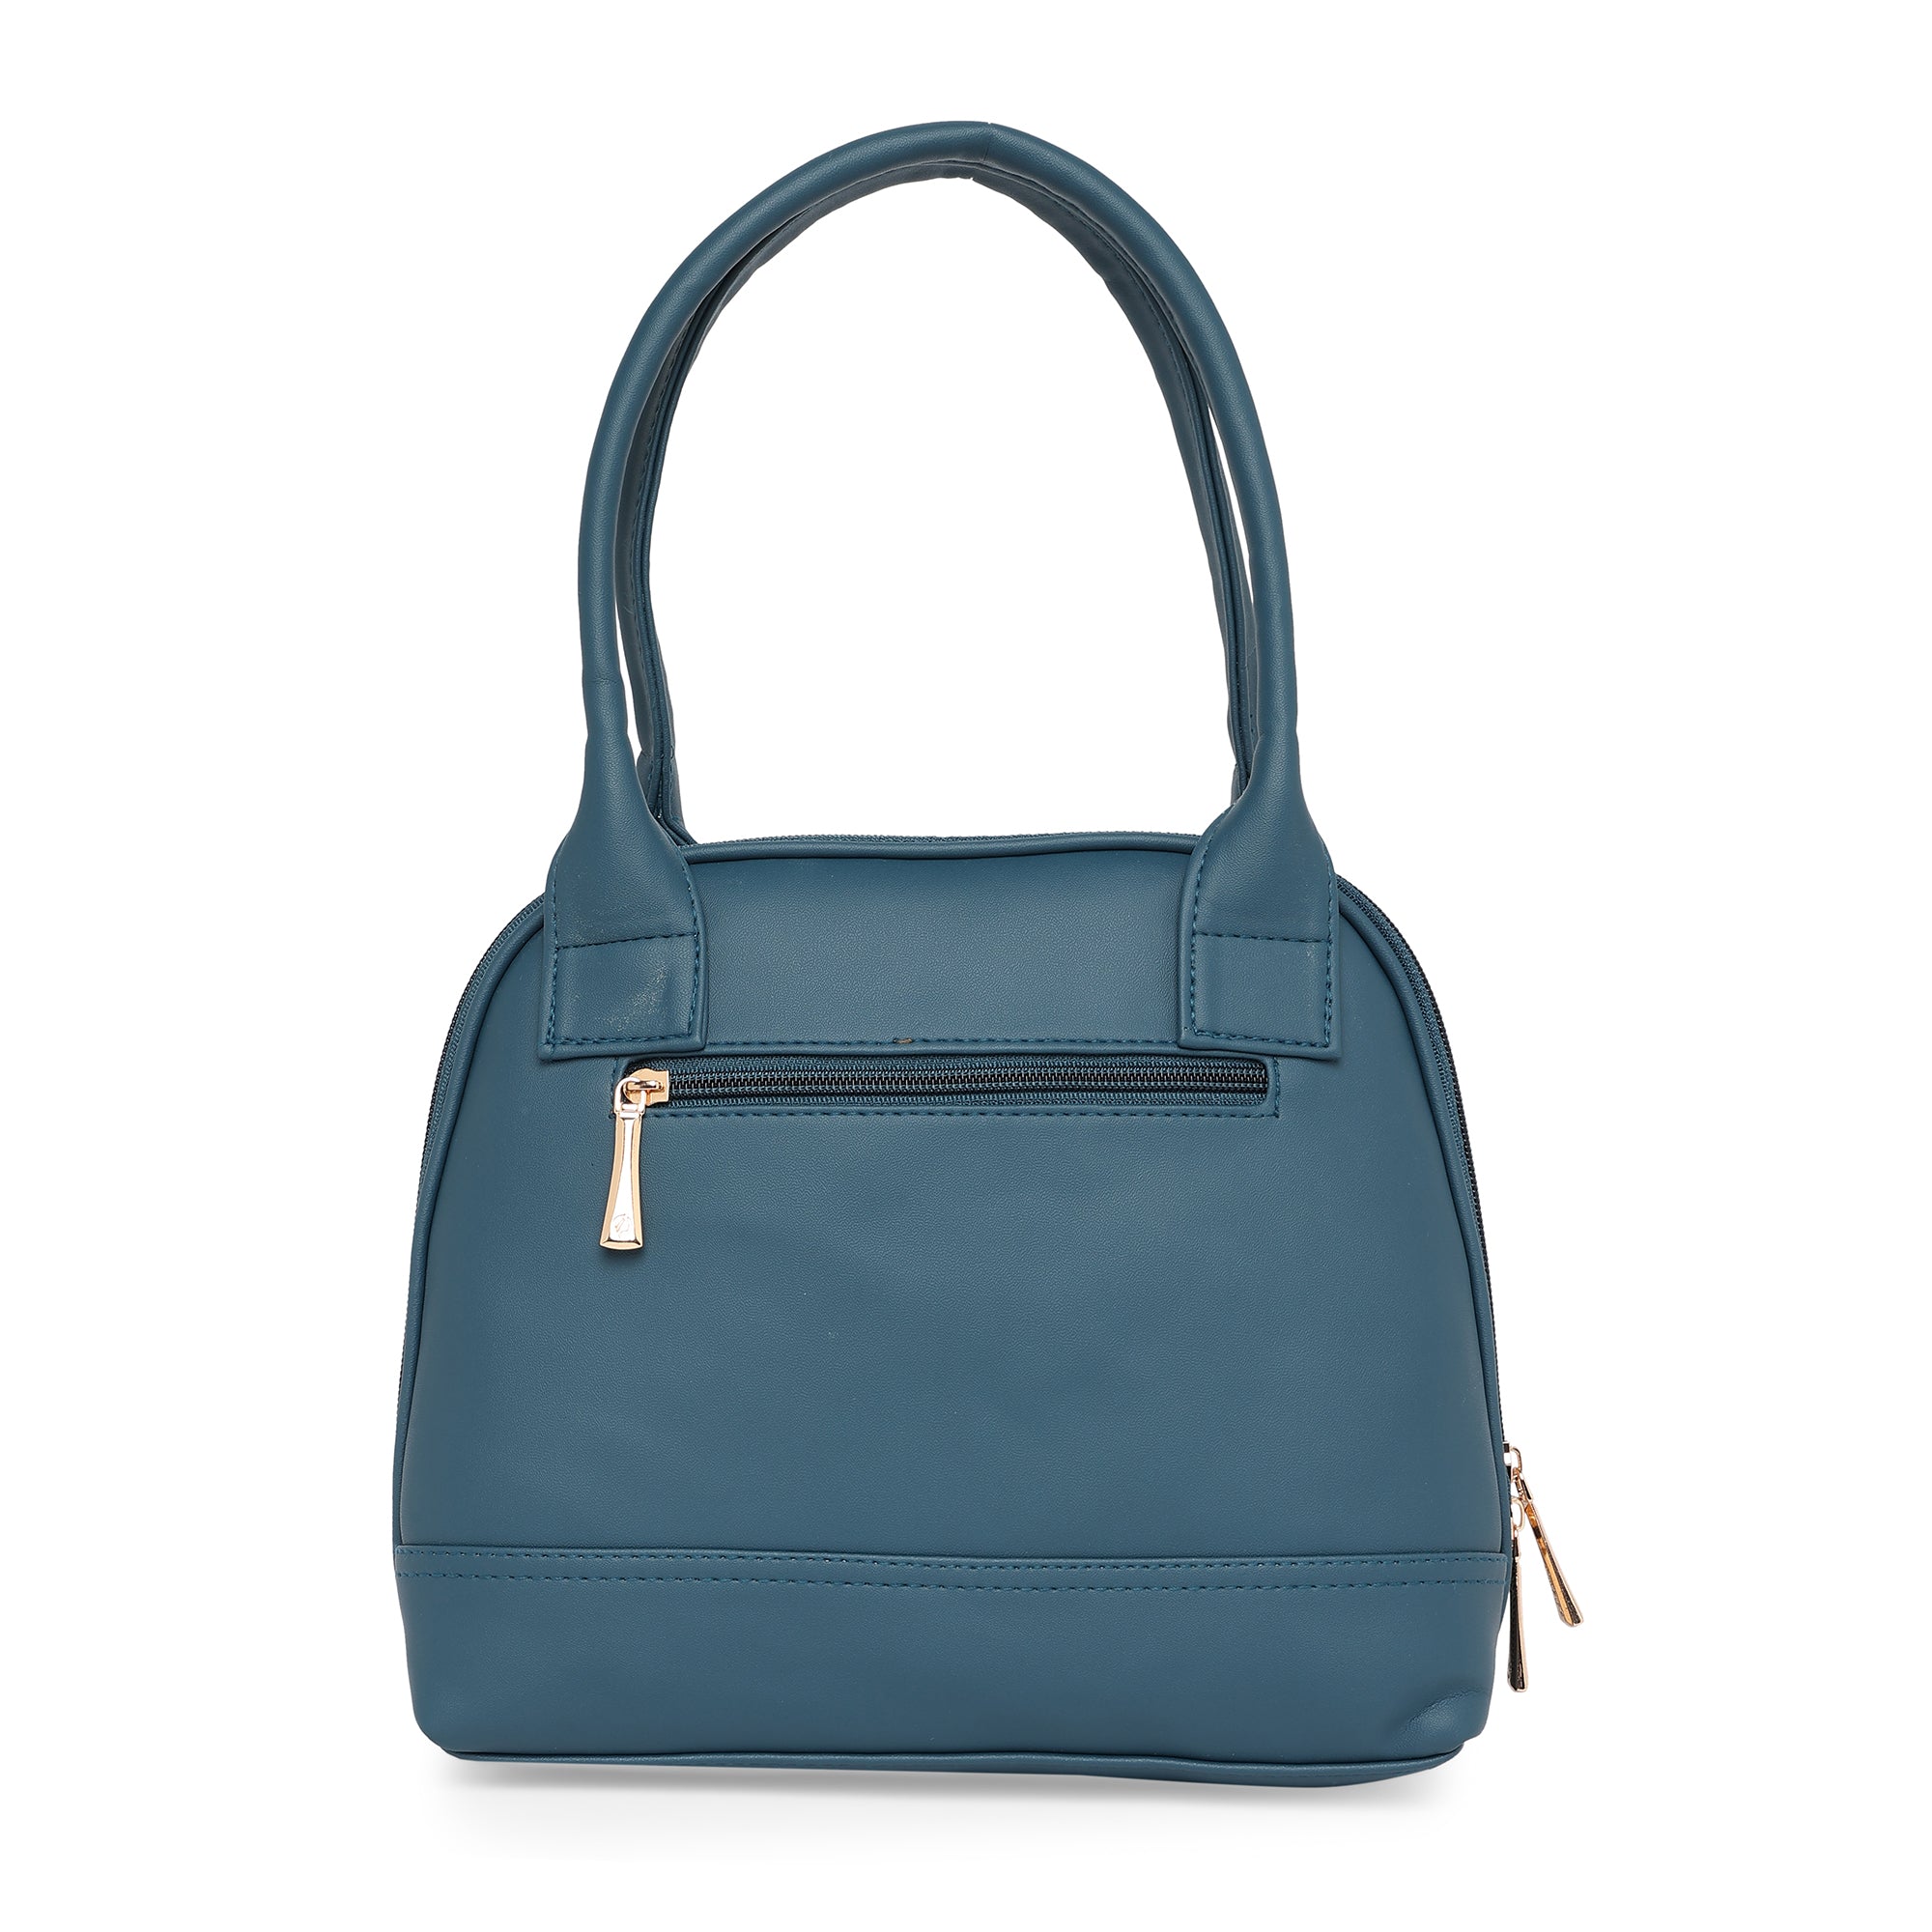 Teal Blue Women Vegan Leather Handbag With Belt